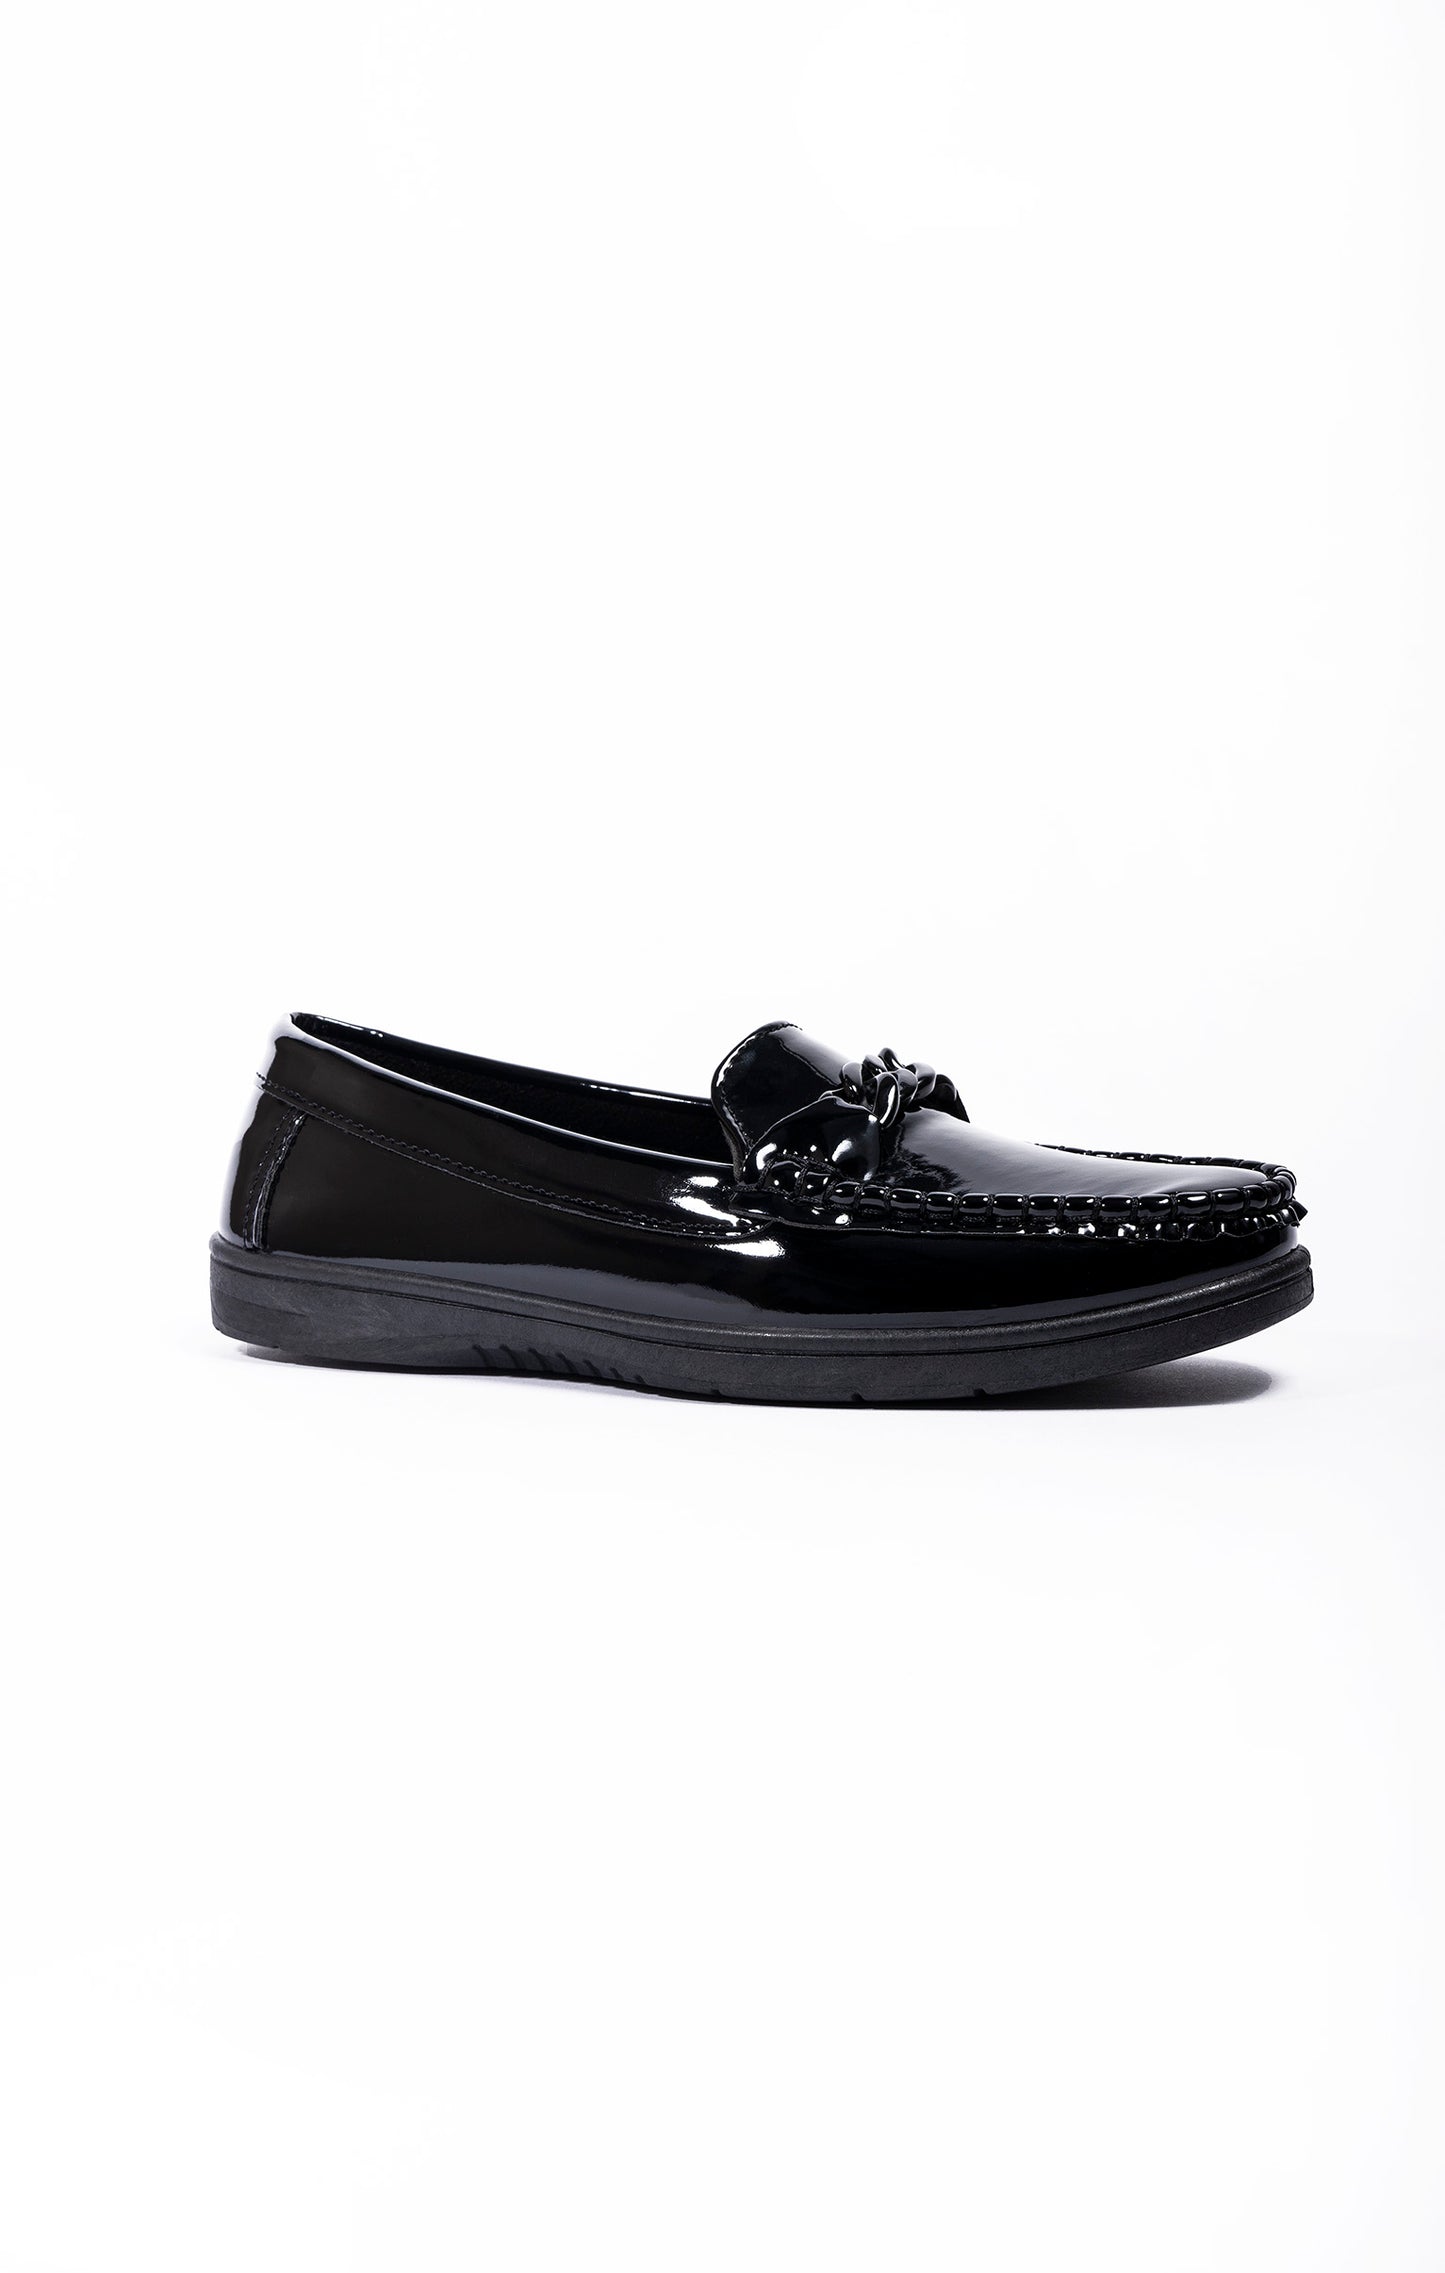 Cirila Ladies Patent Black Slip On Loafers